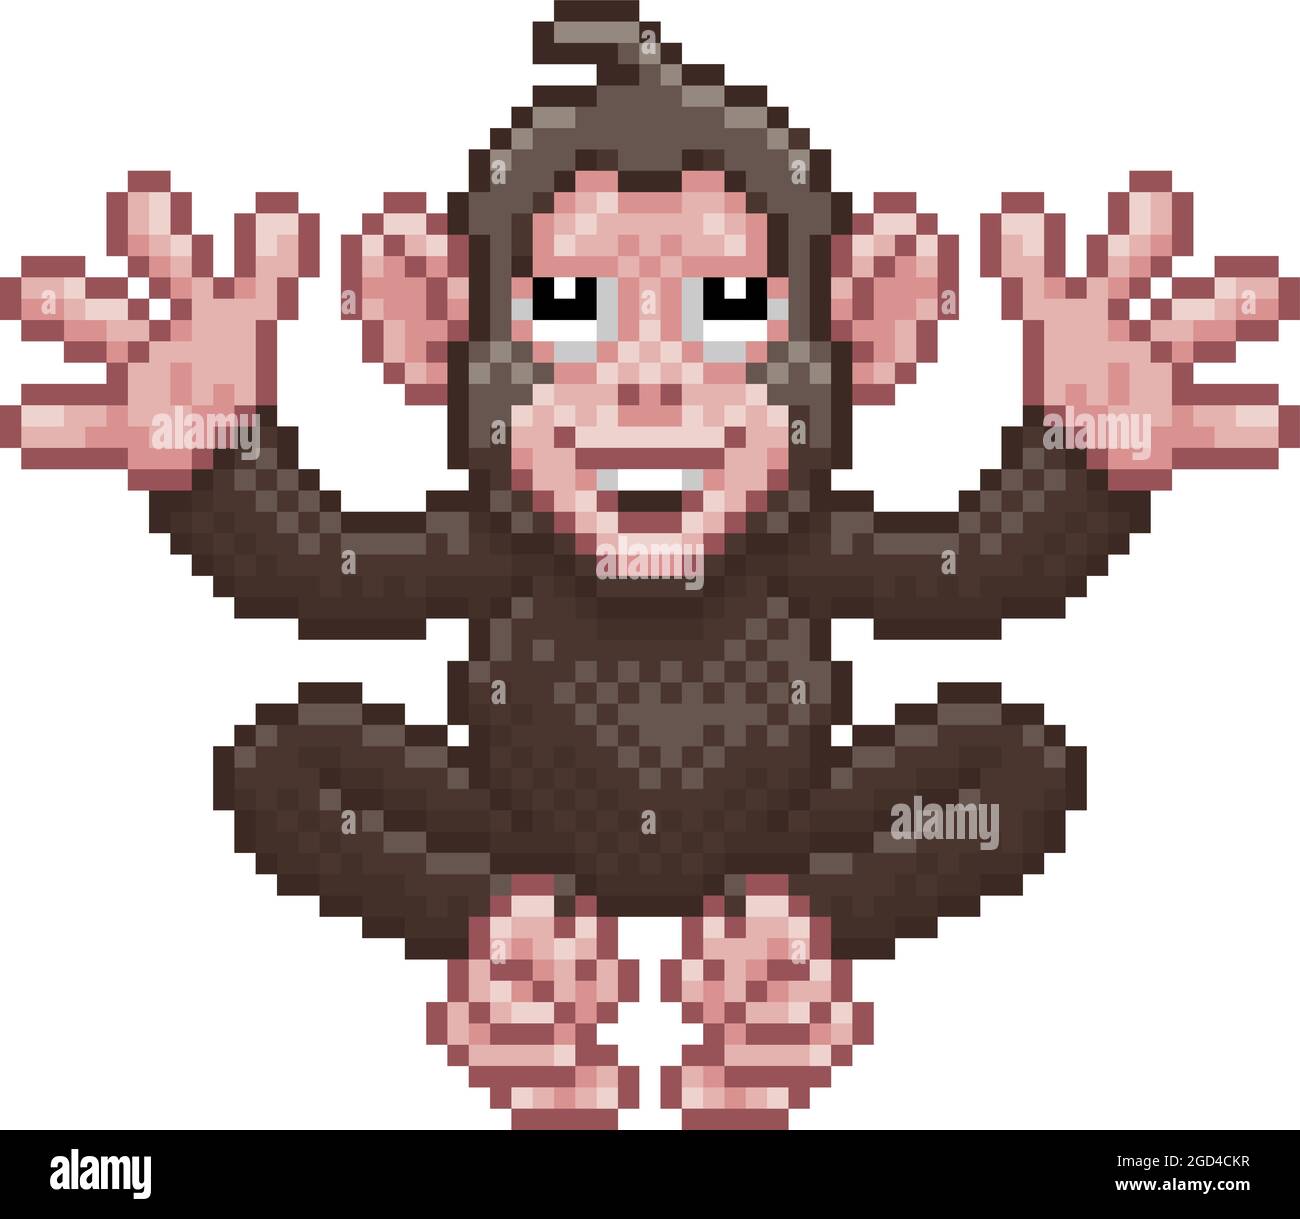 Monkey Chimp Pixel Art Animal Video Game Cartoon Stock Vector